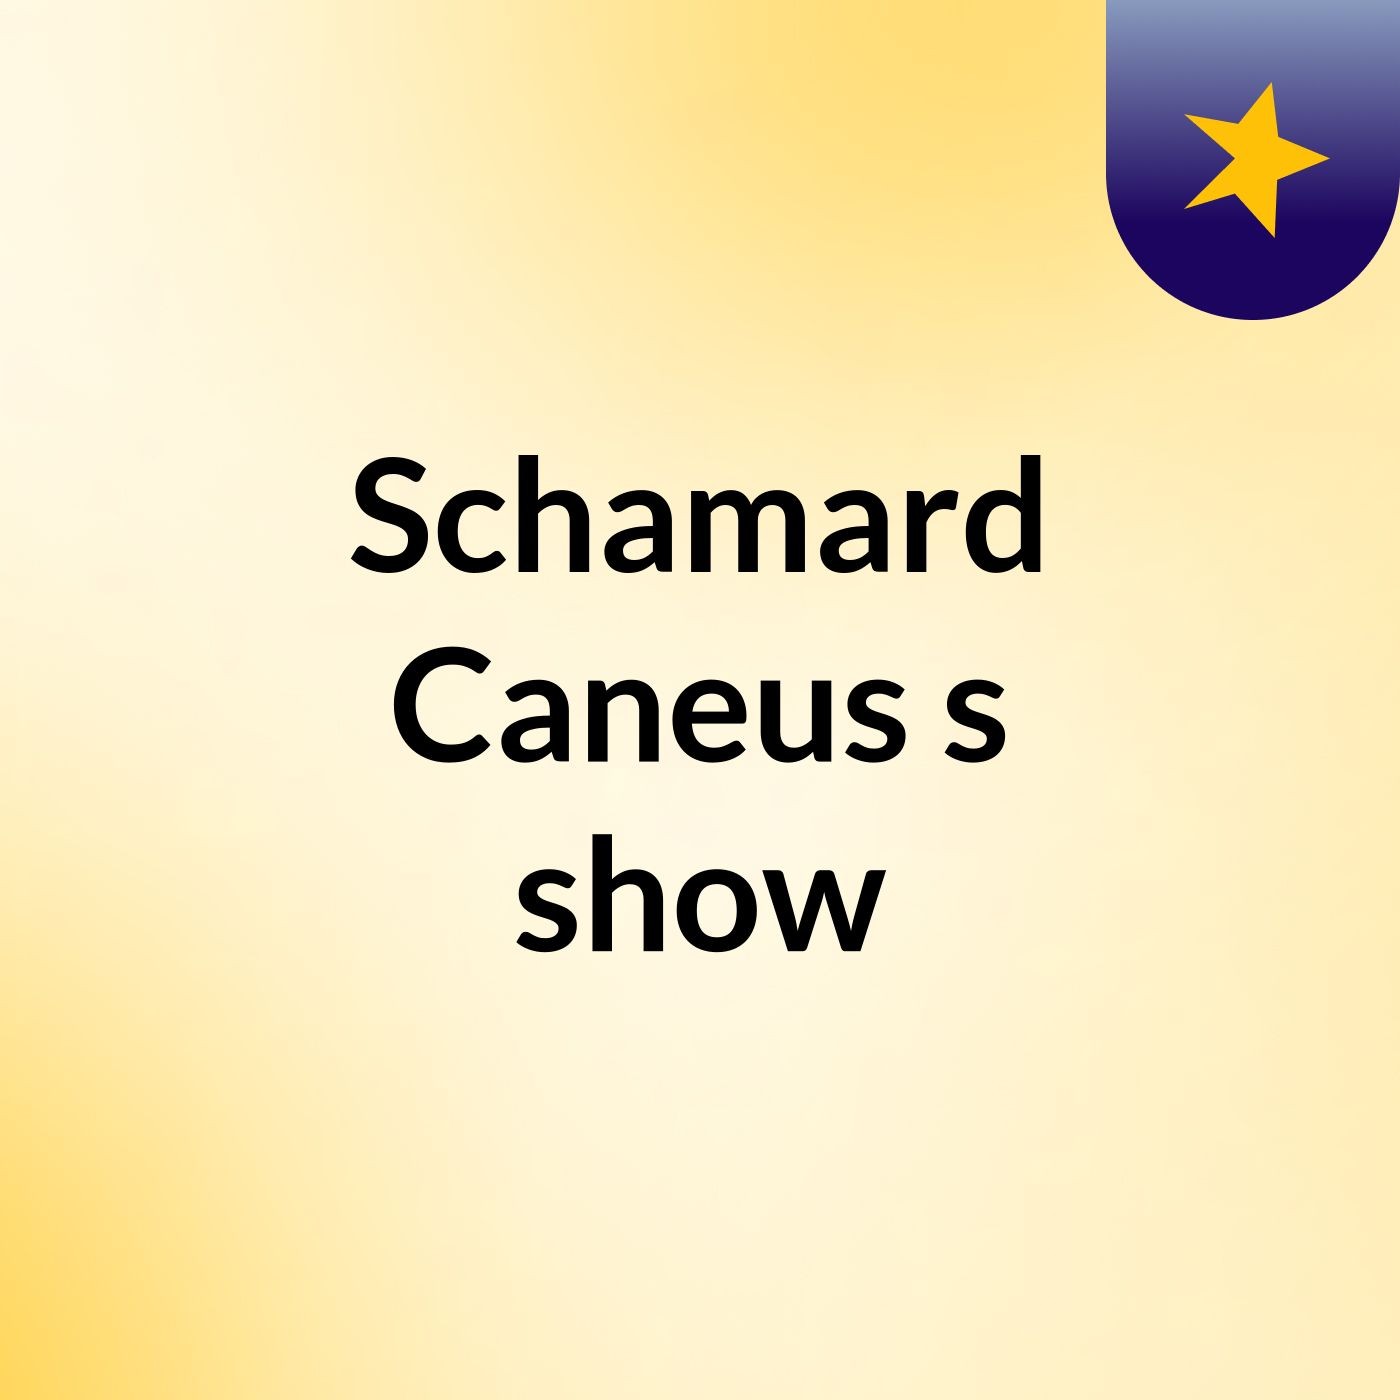 Schamard Caneus's show